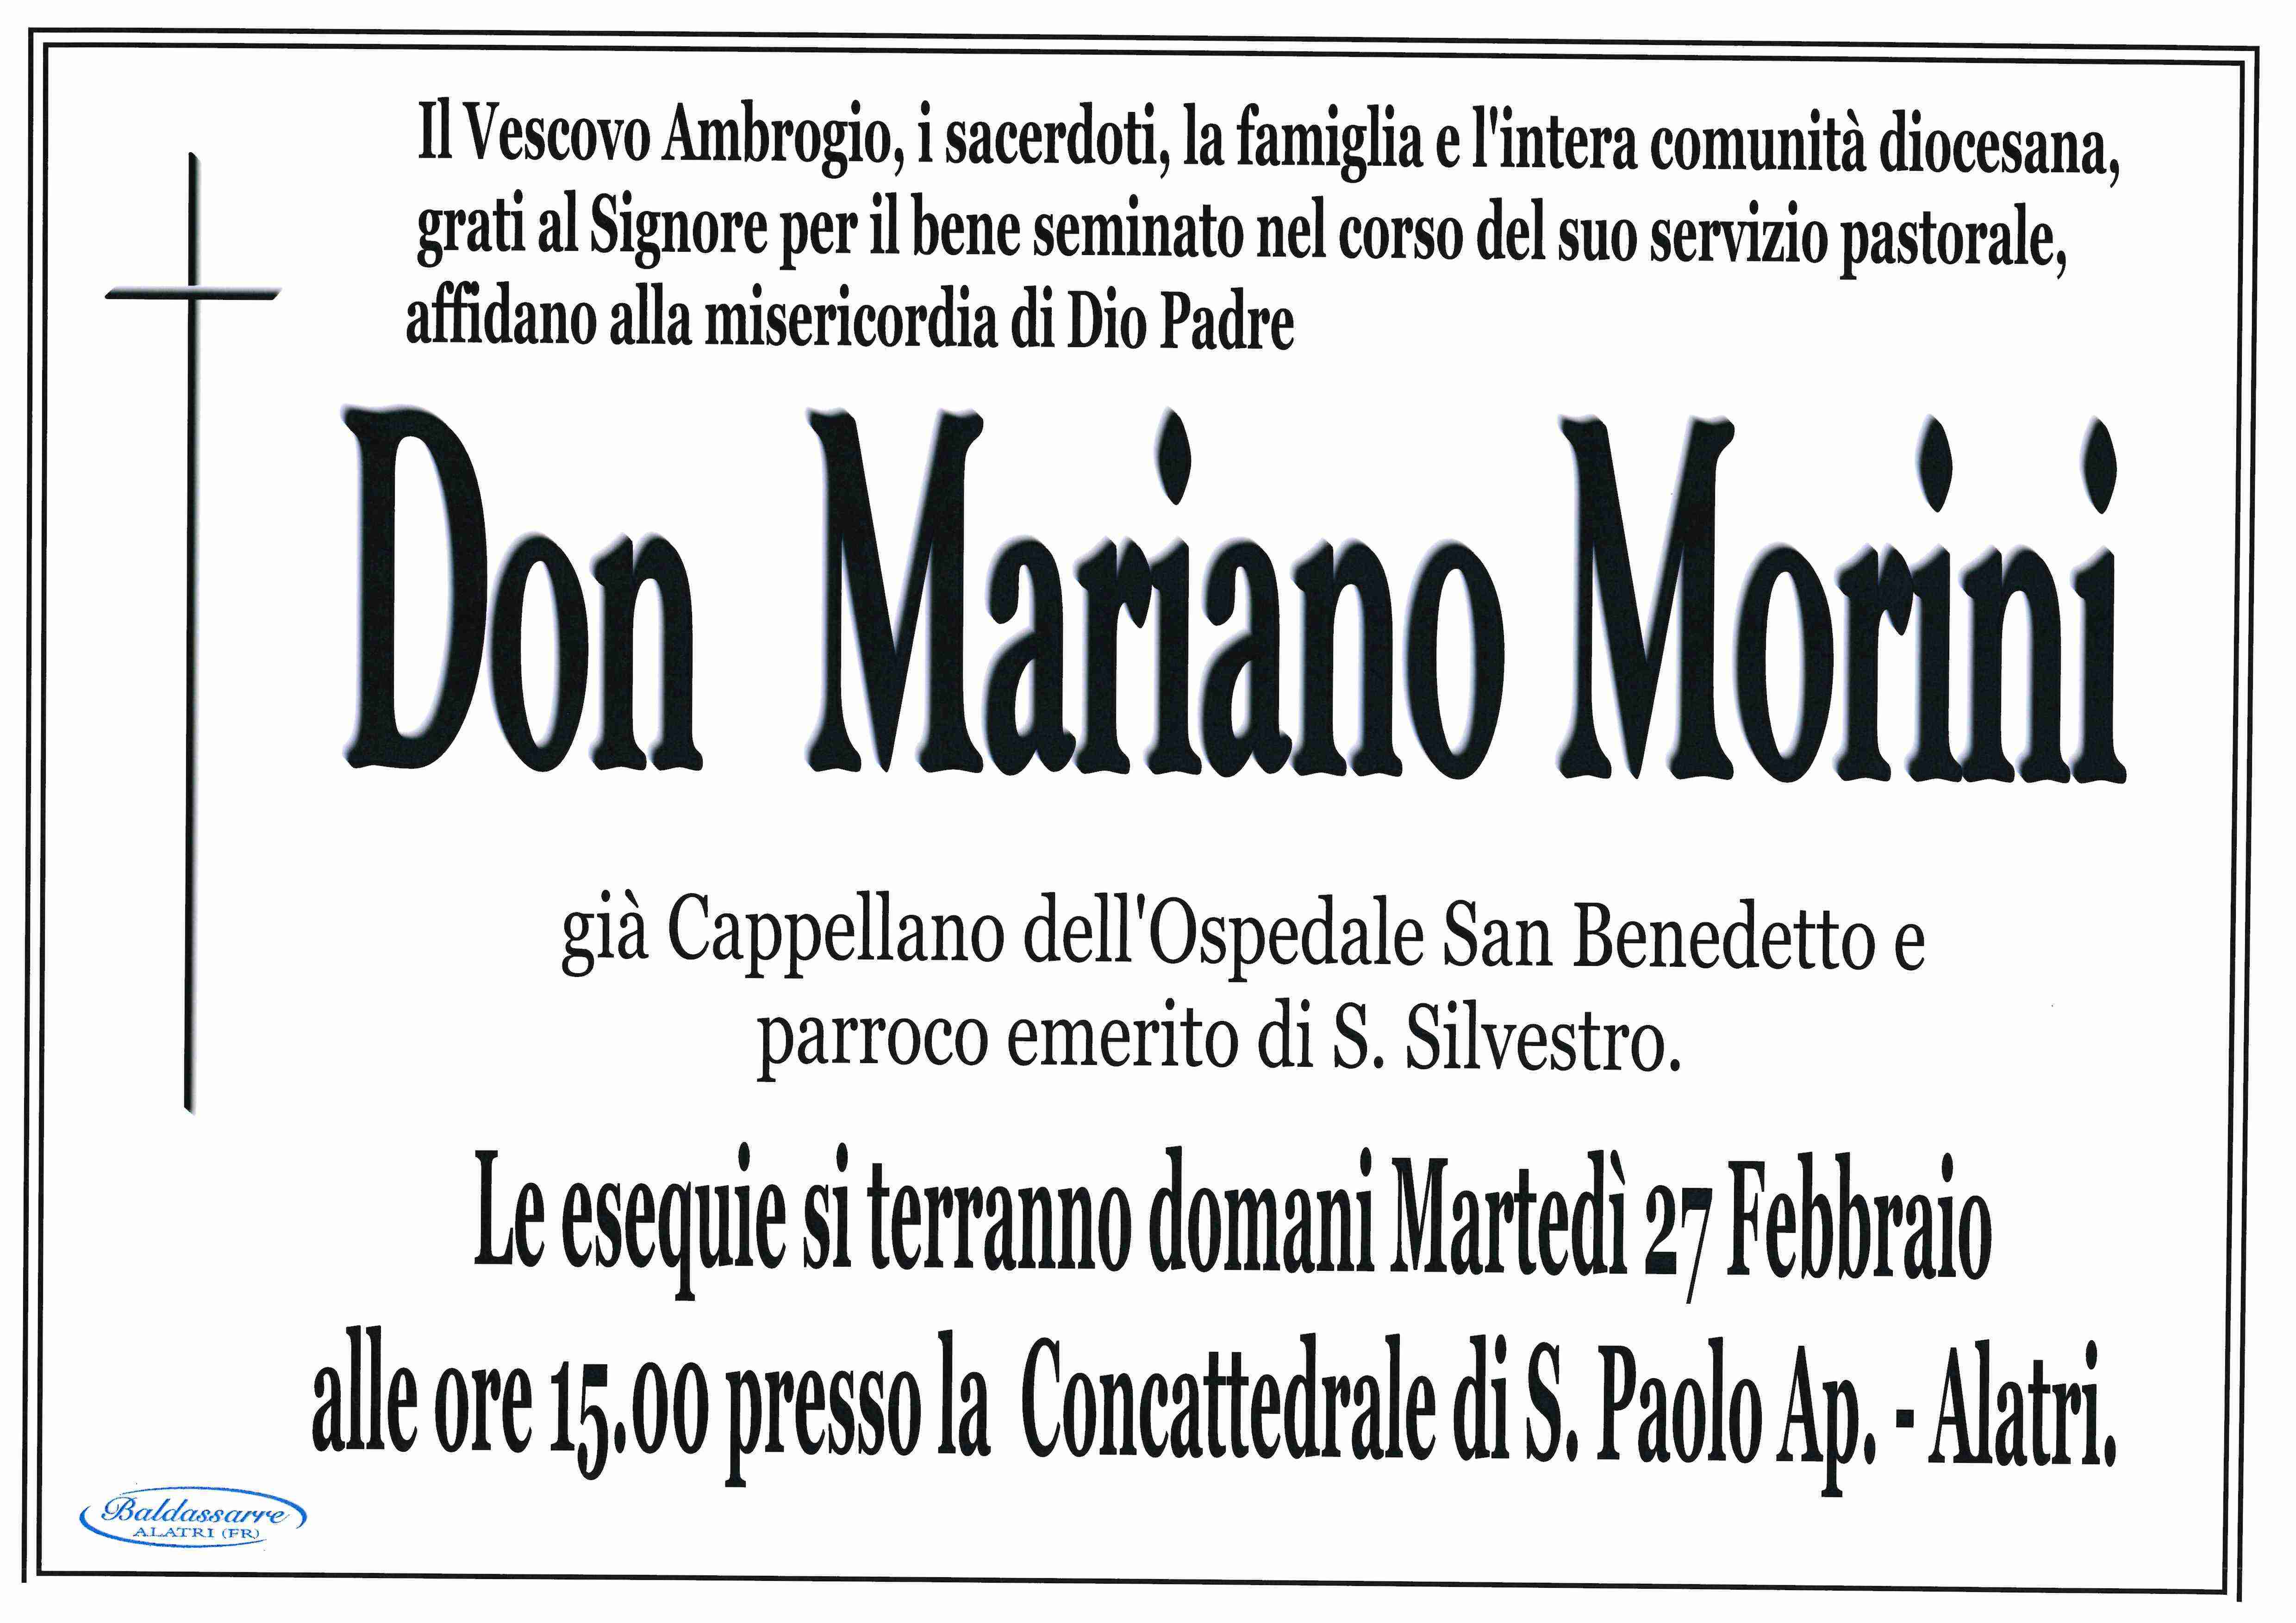 Mariano Morini